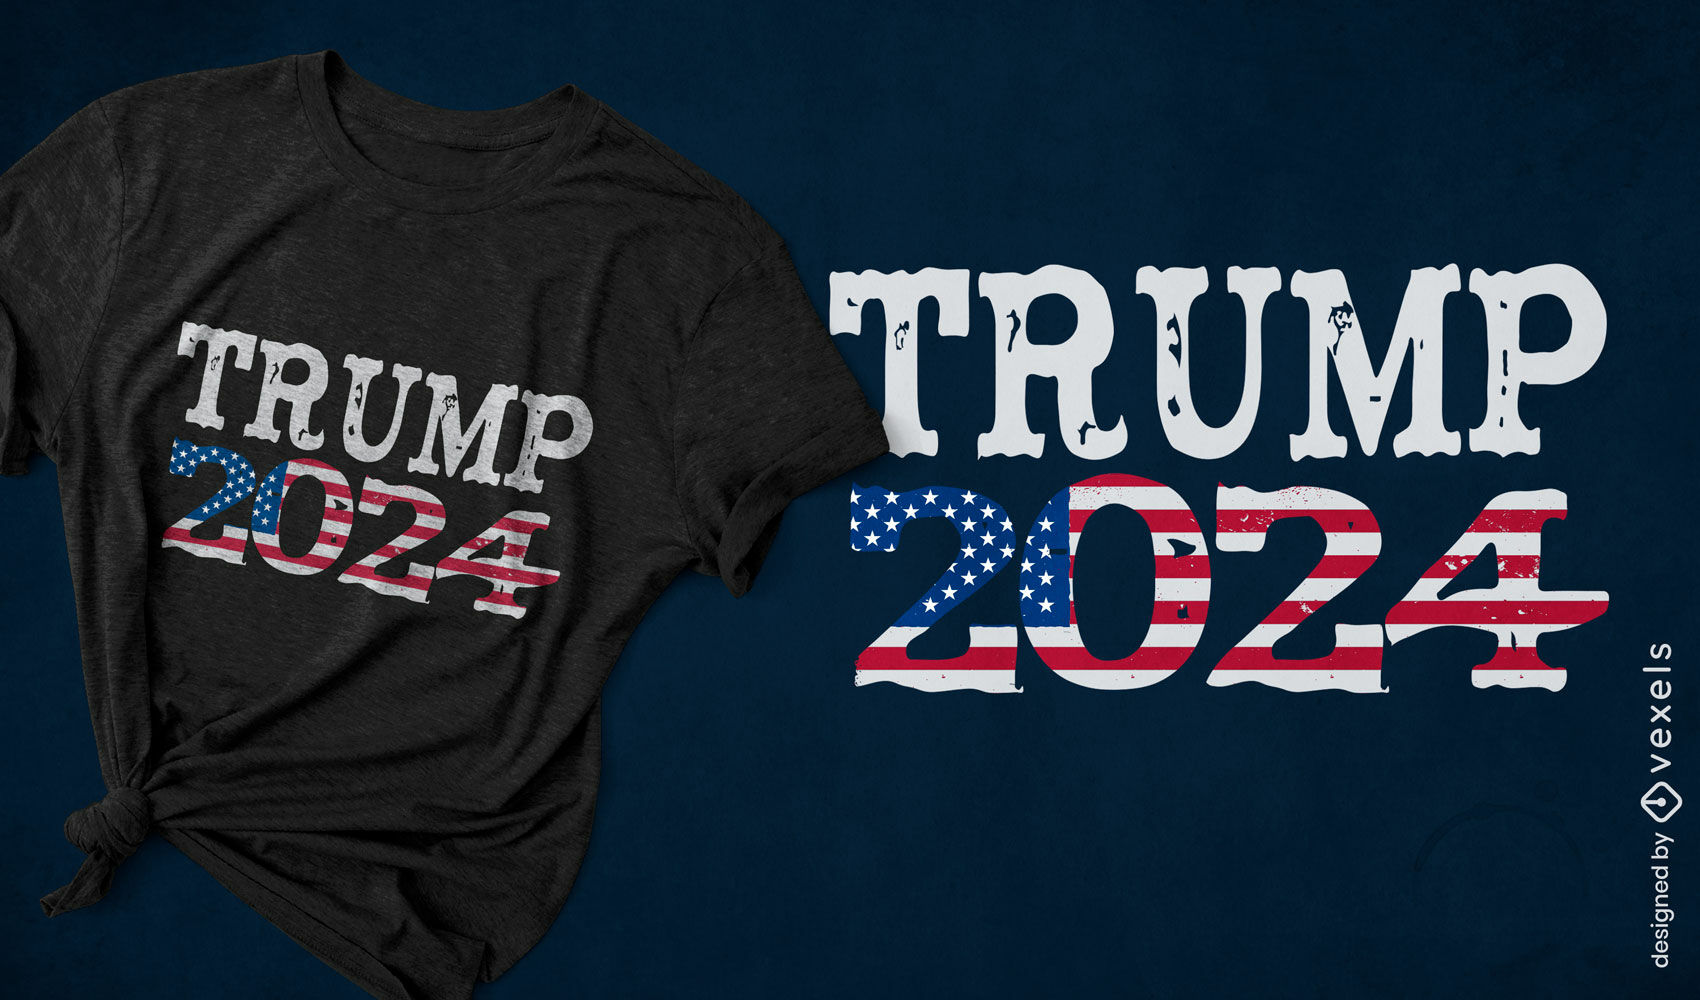 Trump 2024 campaign t-shirt design